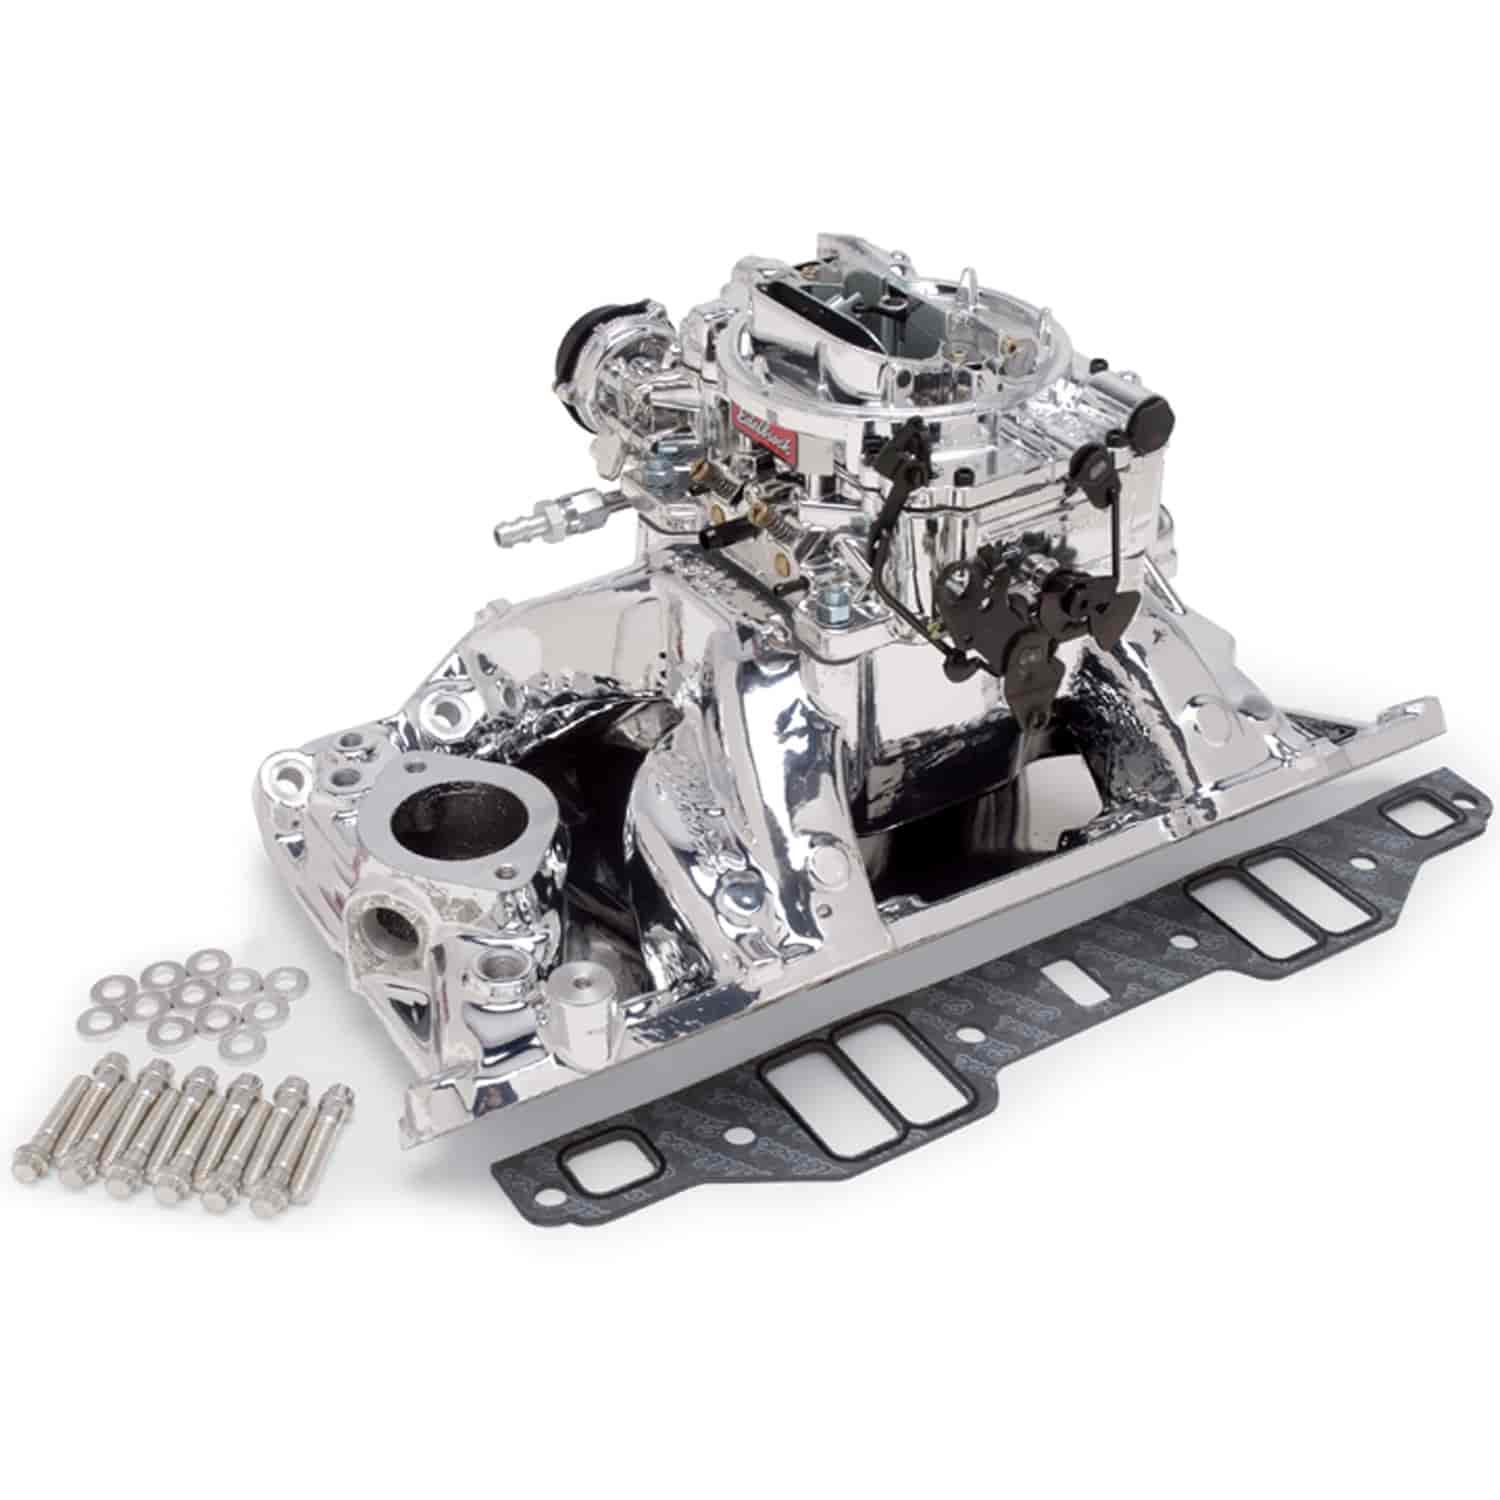 Single-Quad RPM Air-Gap Manifold and Carburetor Kit for Small Block Chrysler 340/360 with Endurashine Finish